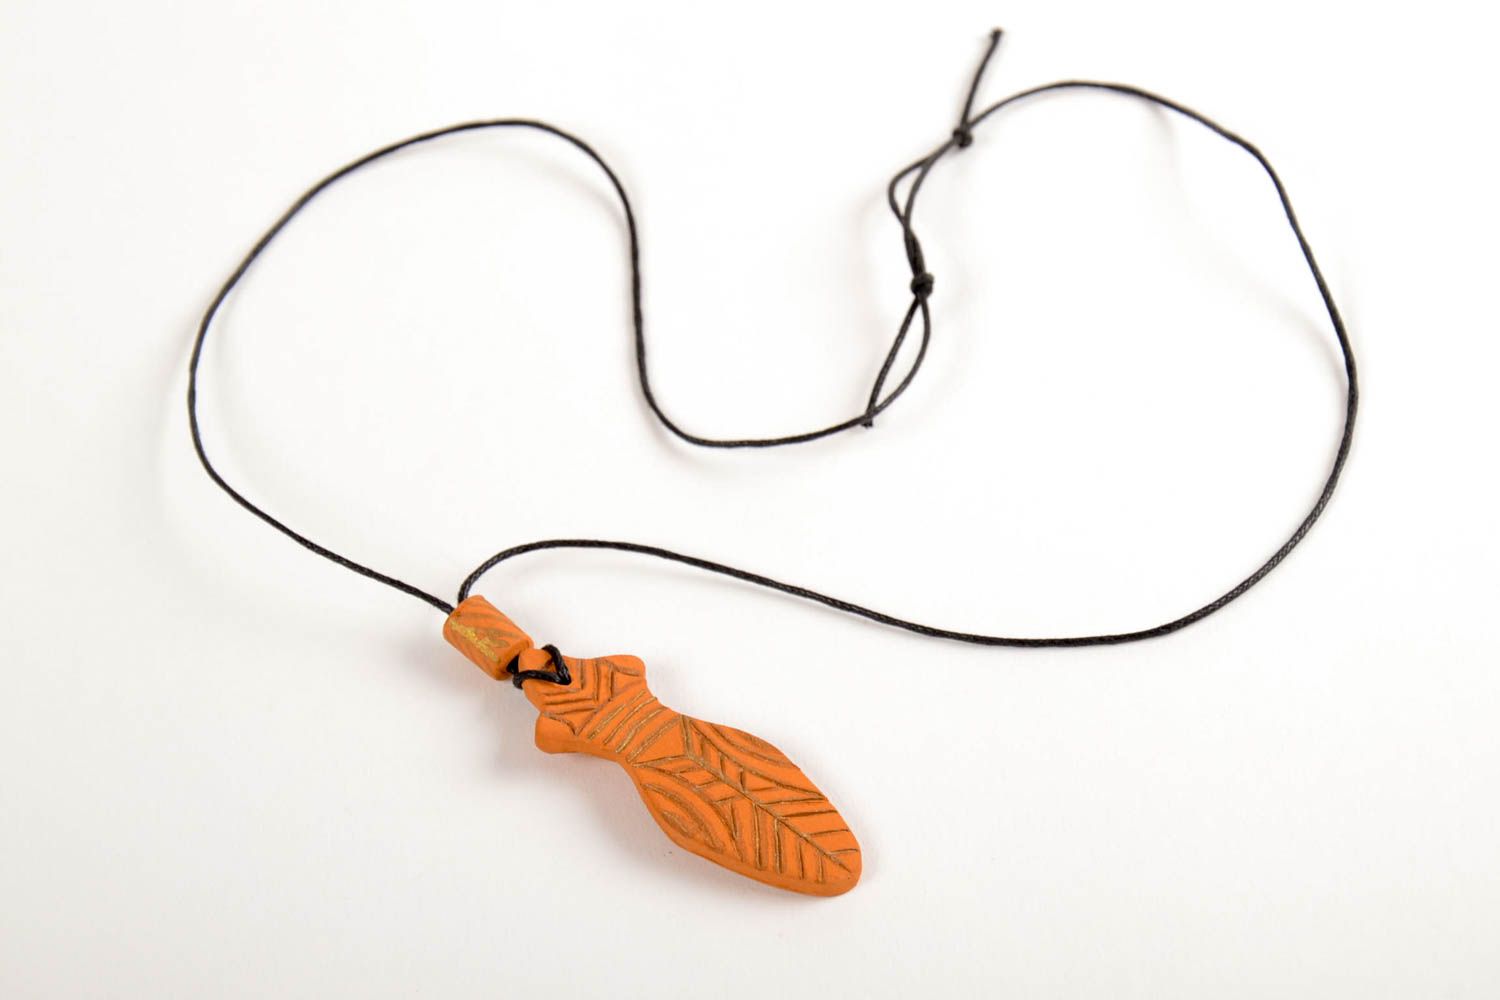 Handmade clay pendant designer pendant unusual accessory gift for women photo 5